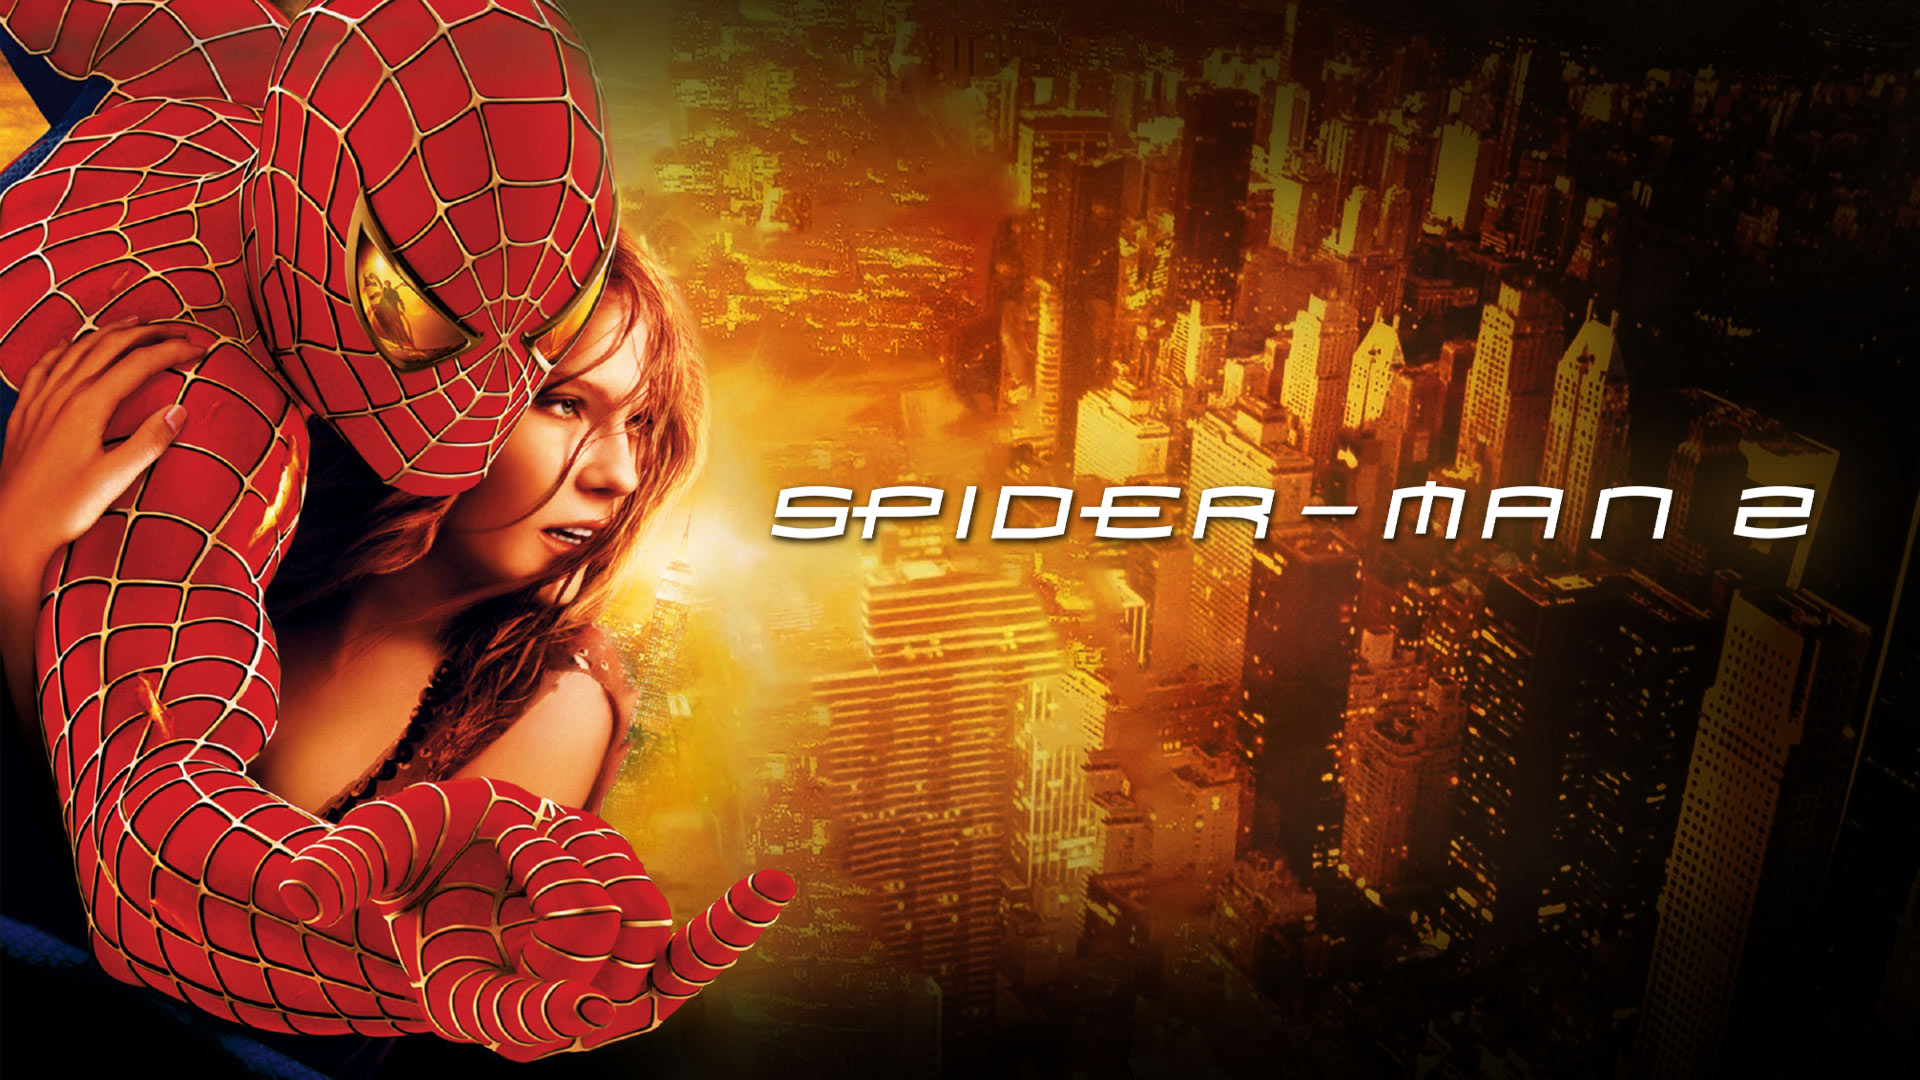 Spider Man 2 Choice Poster